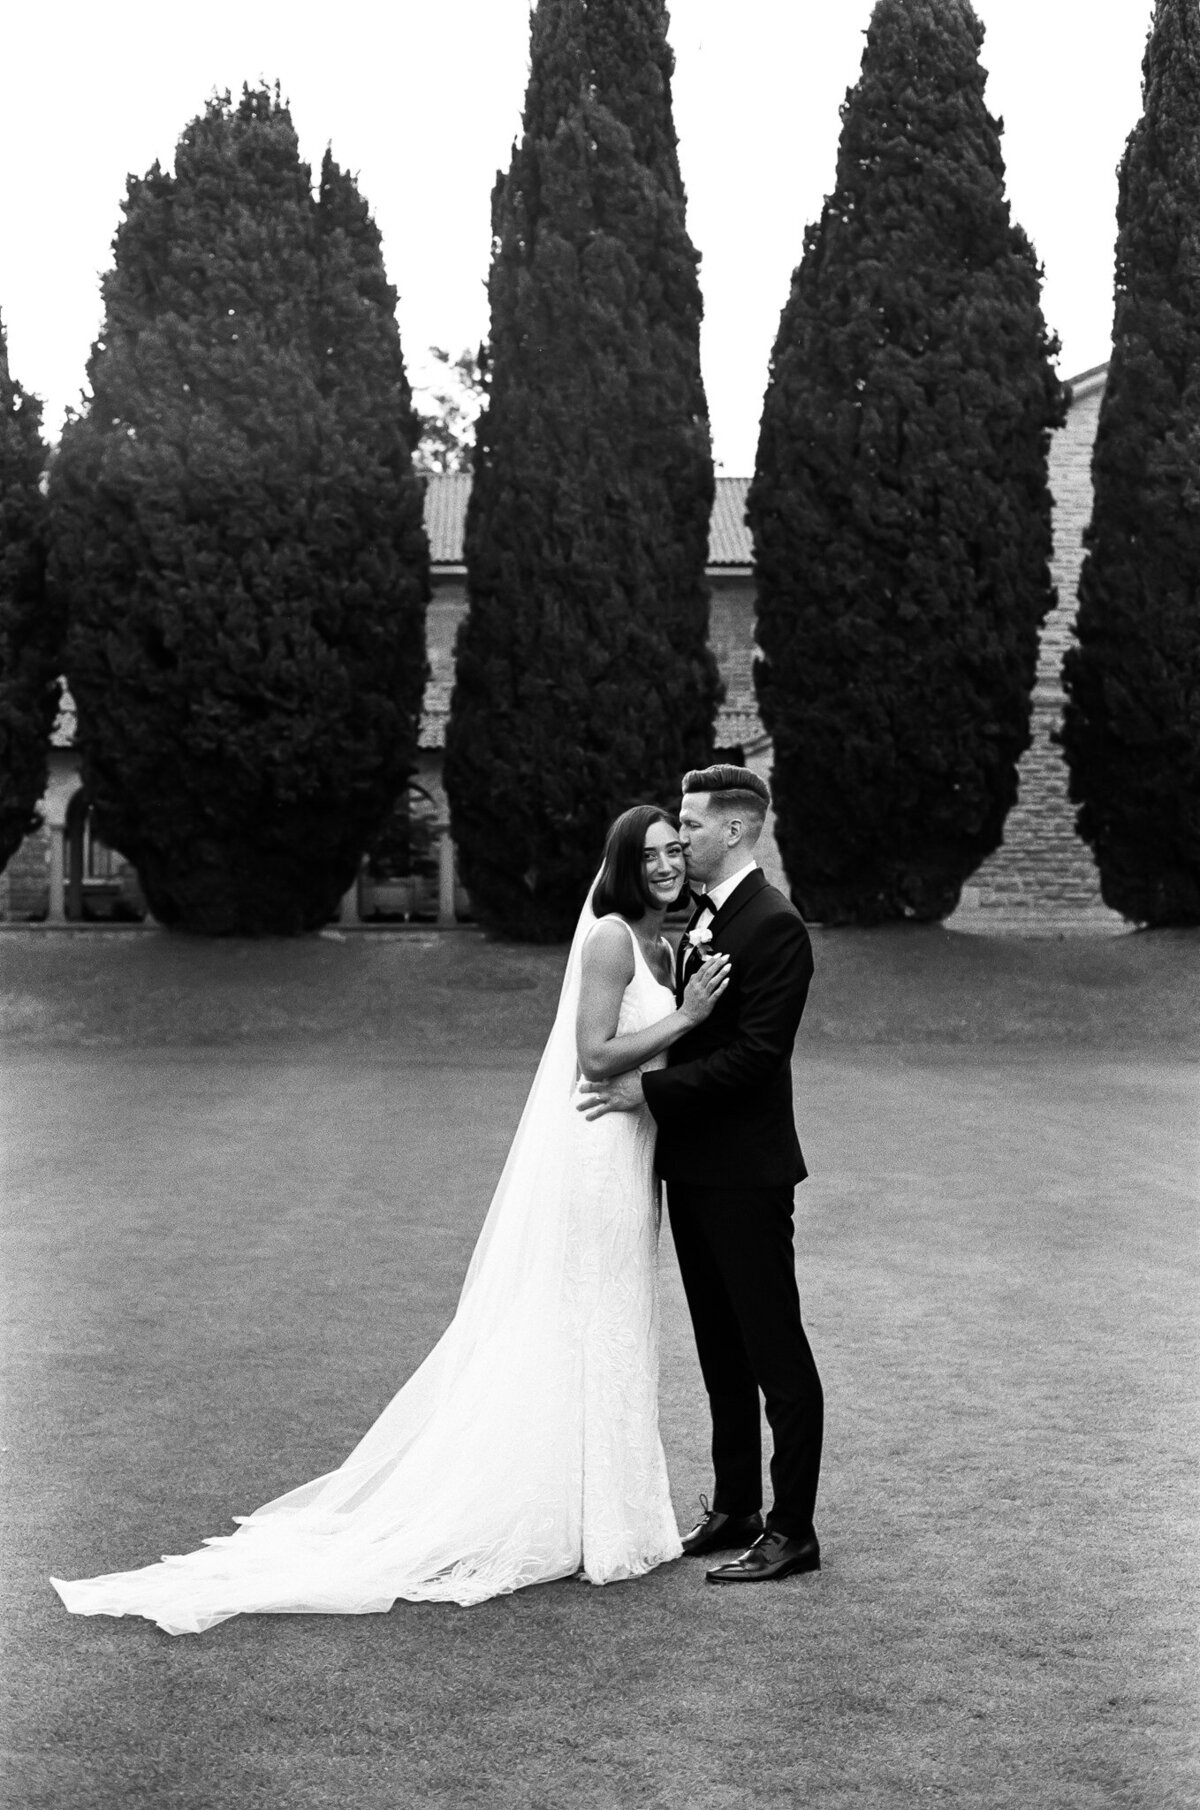 Perth Wedding Photographer Kath Young - C&R 35mm film photos-28